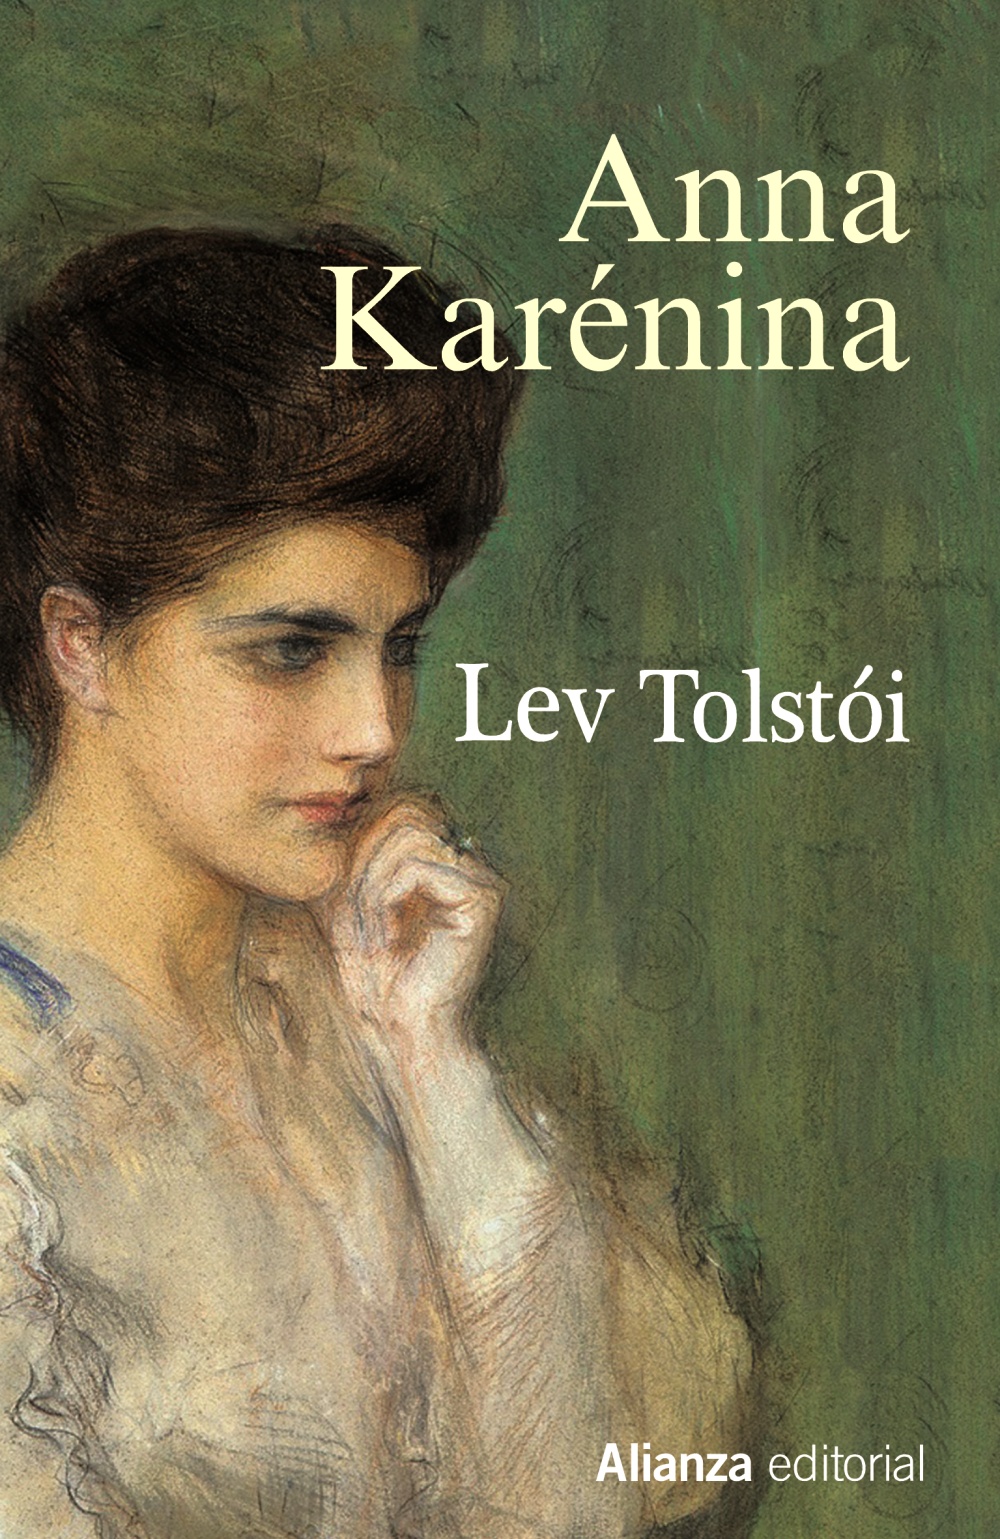 "Anna Karenina" by Lev Tolstoy